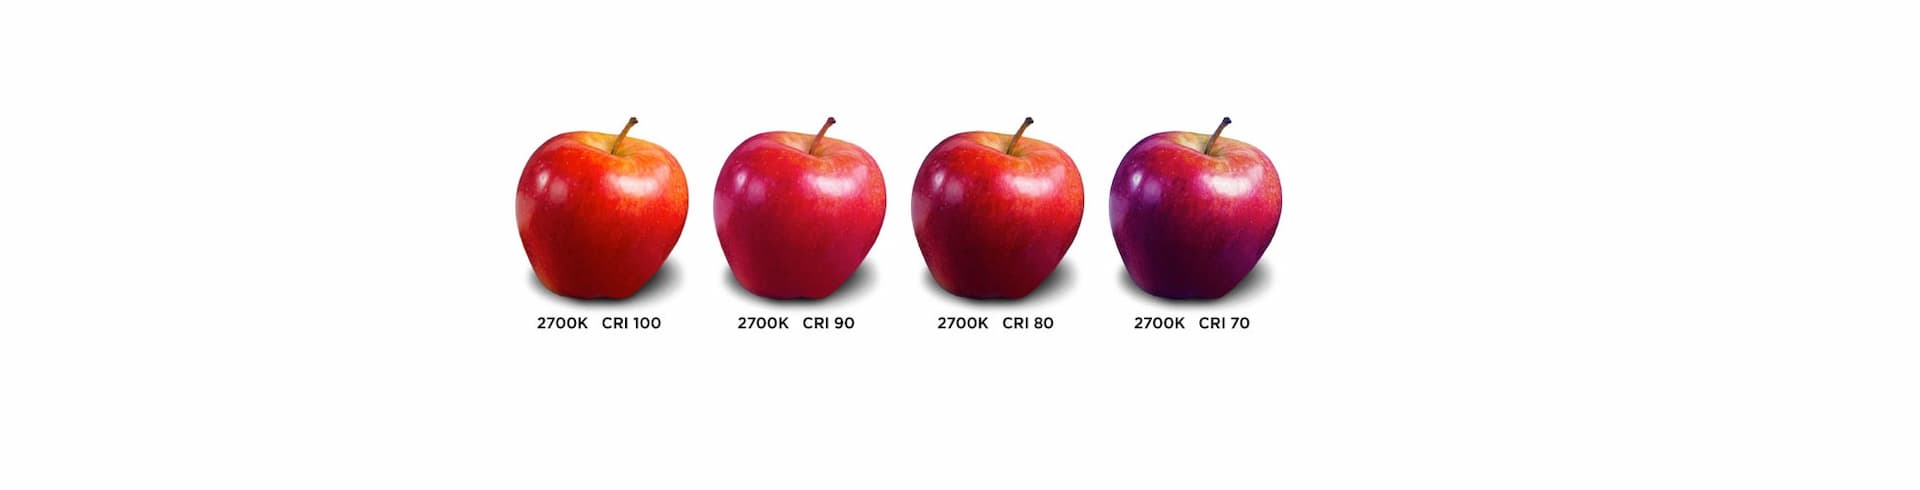 CRI apples